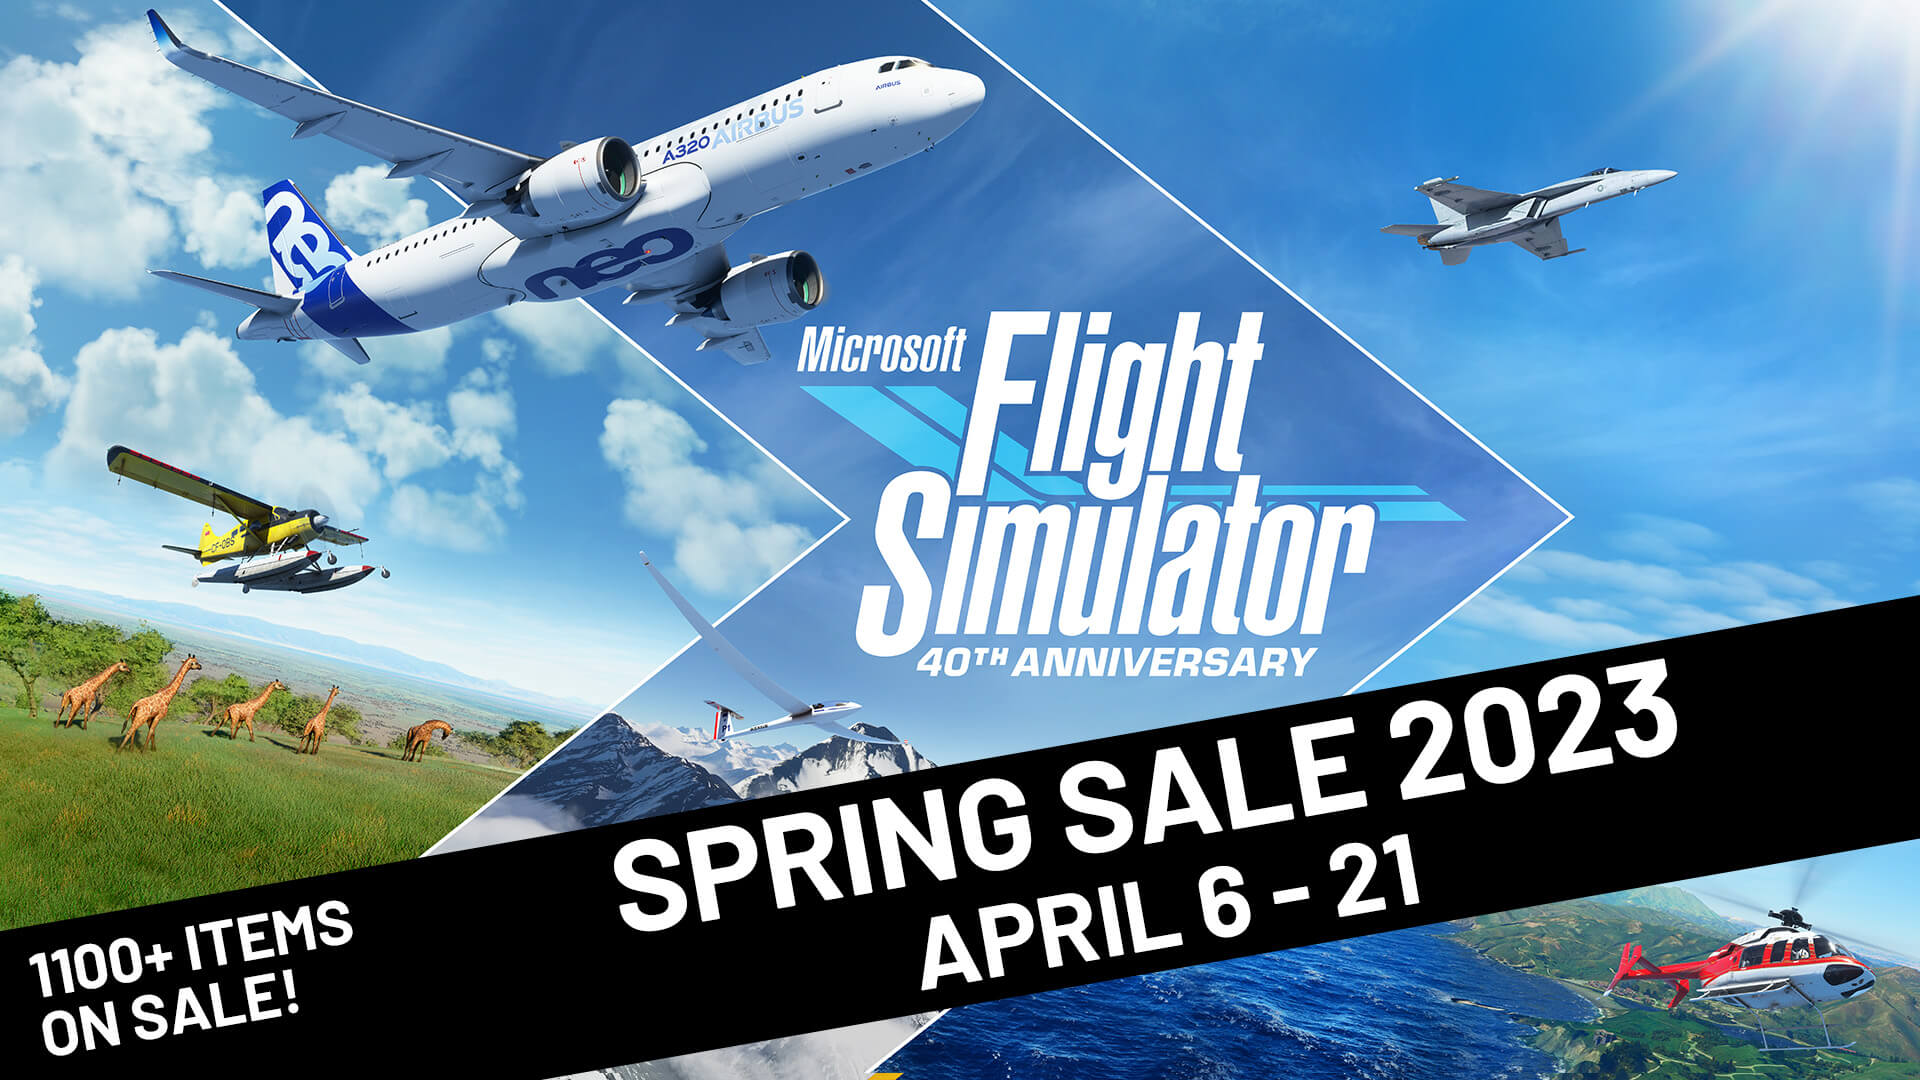 Microsoft Flight Simulator Spring Sale 2023. April 6 - 21